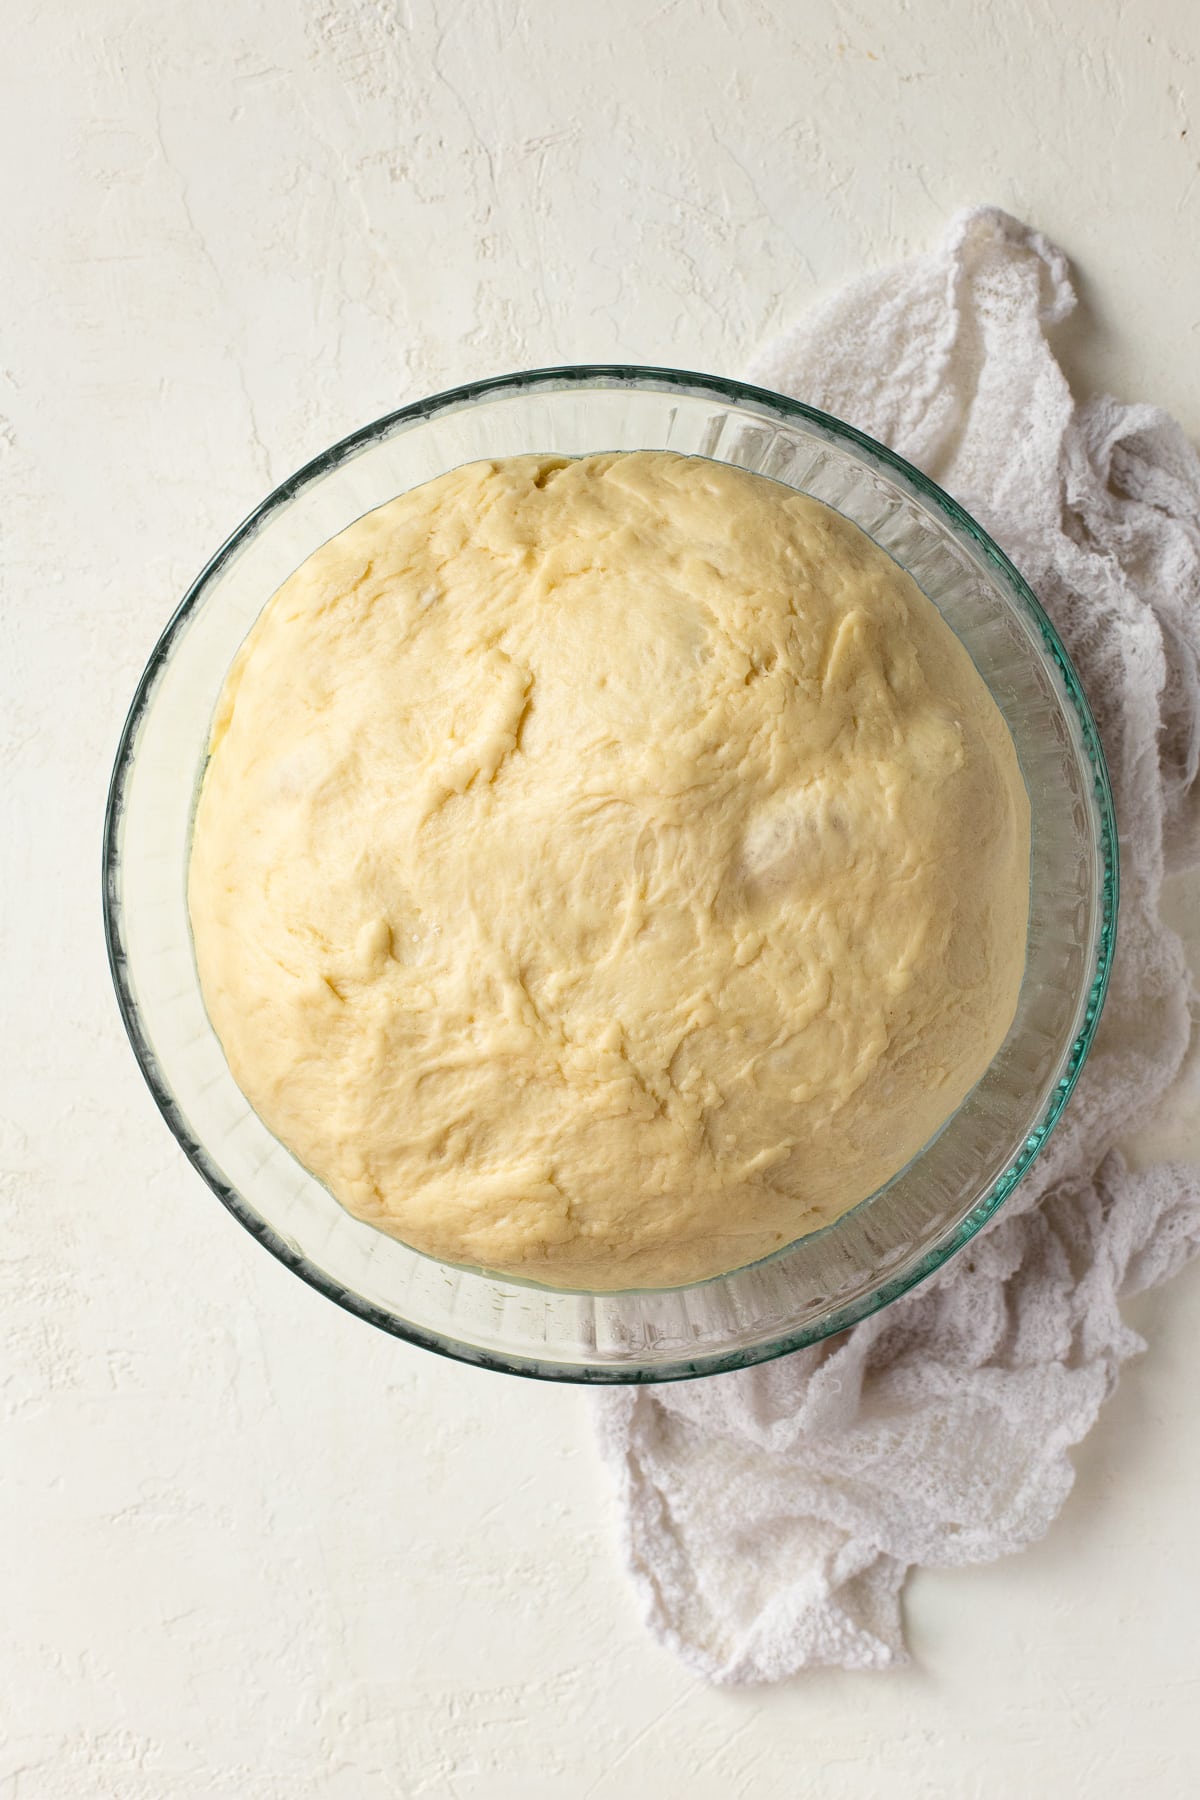 Brioche dough in bowl after rising.